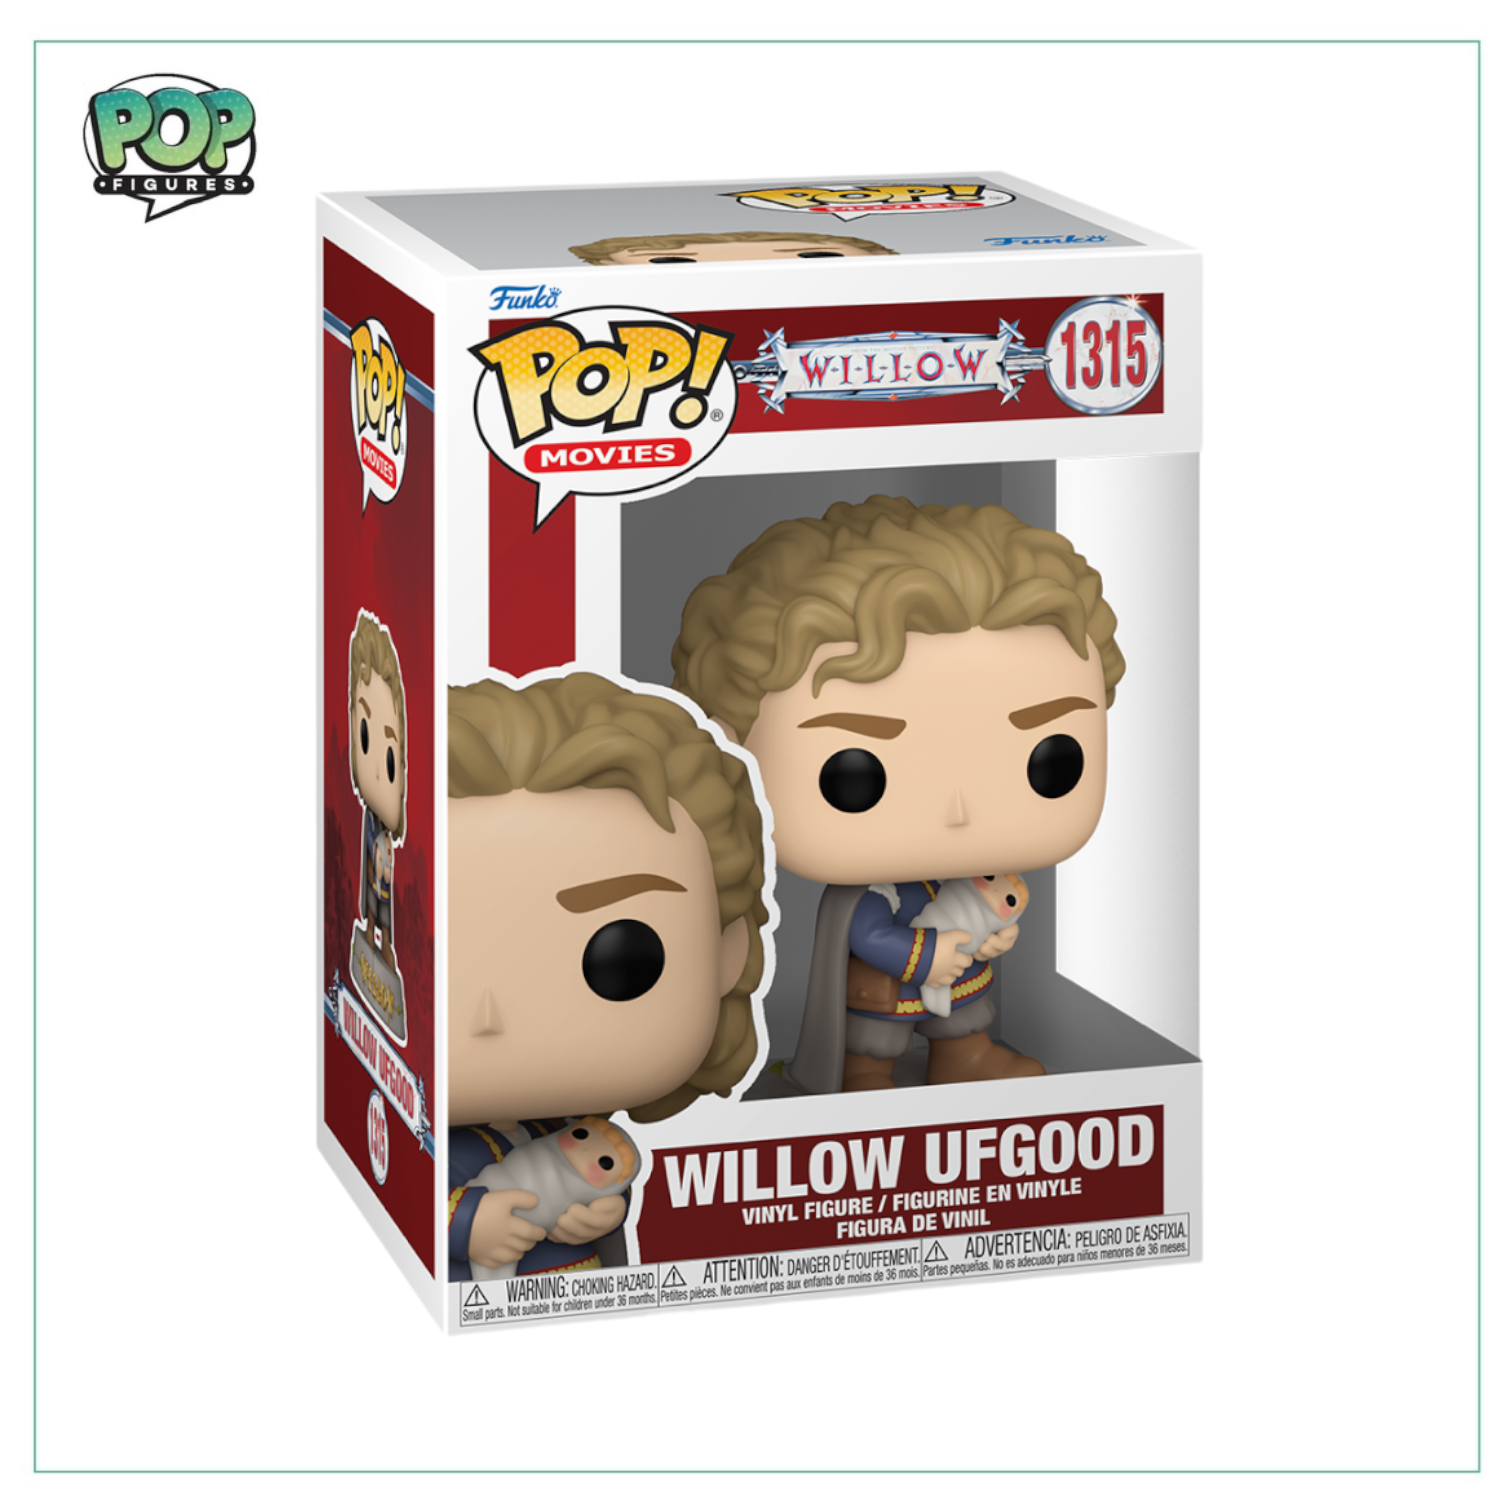 Willow Ufgood #1315 Funko Pop! - Willow